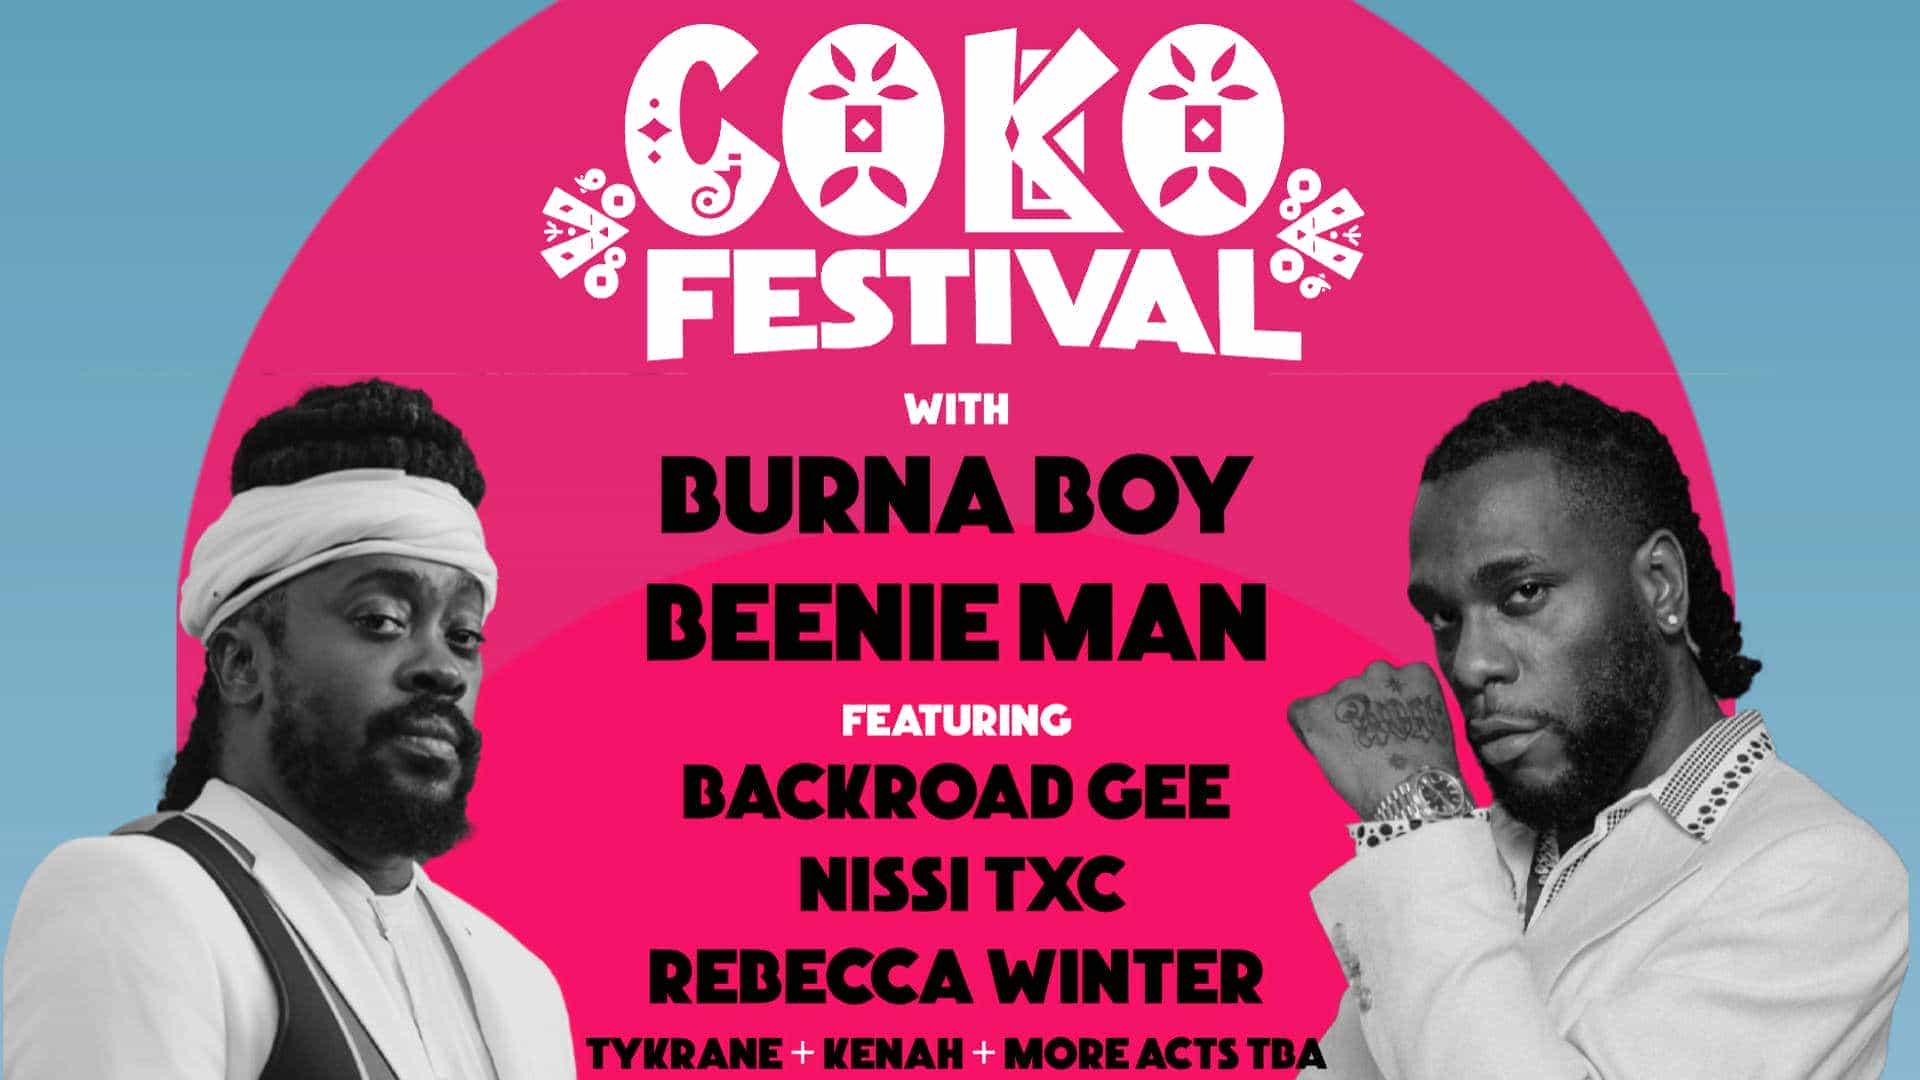 Coko Festival - Burna Boy + Beenie Man